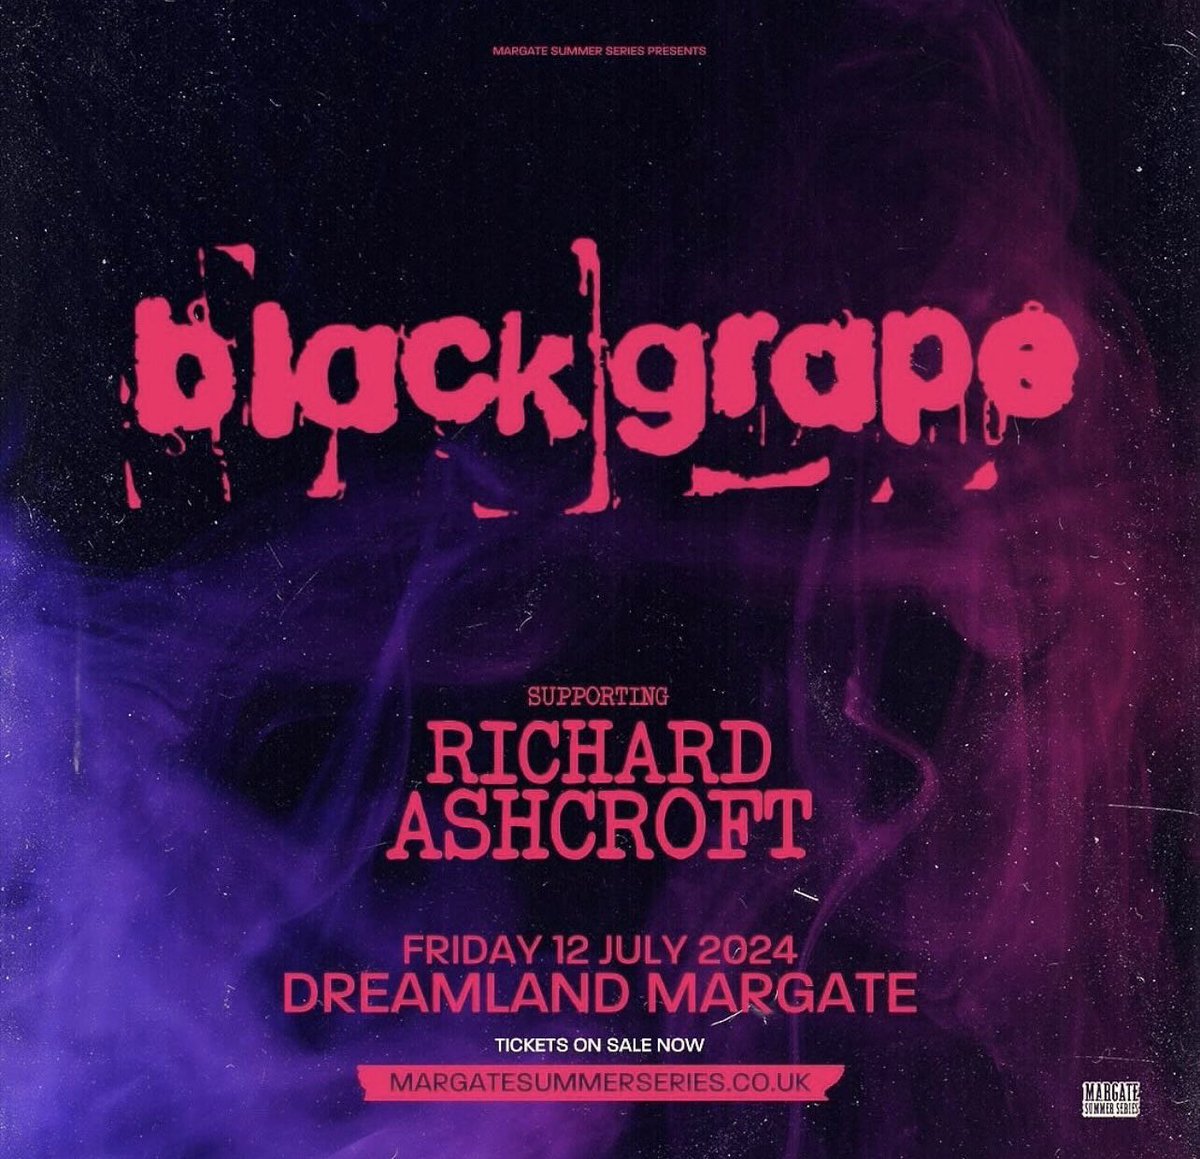 🍇 BLACK GRAPE play Dreamland in Margate on Friday 12th July 2024 with Richard Ashcroft 🍇 . Tickets available now: ticketweb.uk/event/richard-… . #BlackGrape #ShaunRyder #KermitLeveridge #RichardAshcroft #Dreamland #Margate #Livemusic 💜💜💜